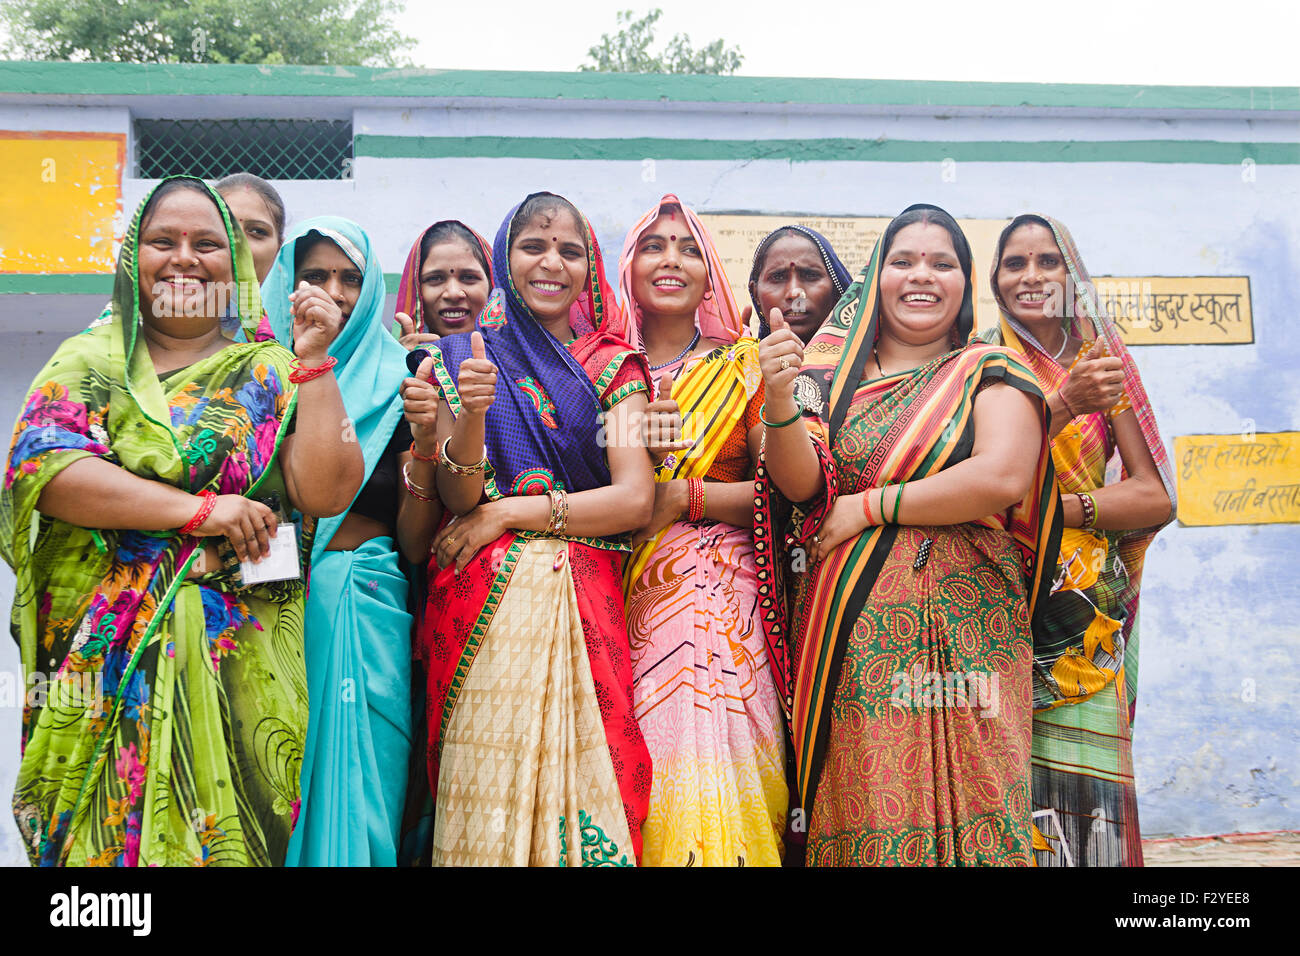 Groupe villageois rural indien foule femme shwoing article voisin Thumbs Up Banque D'Images